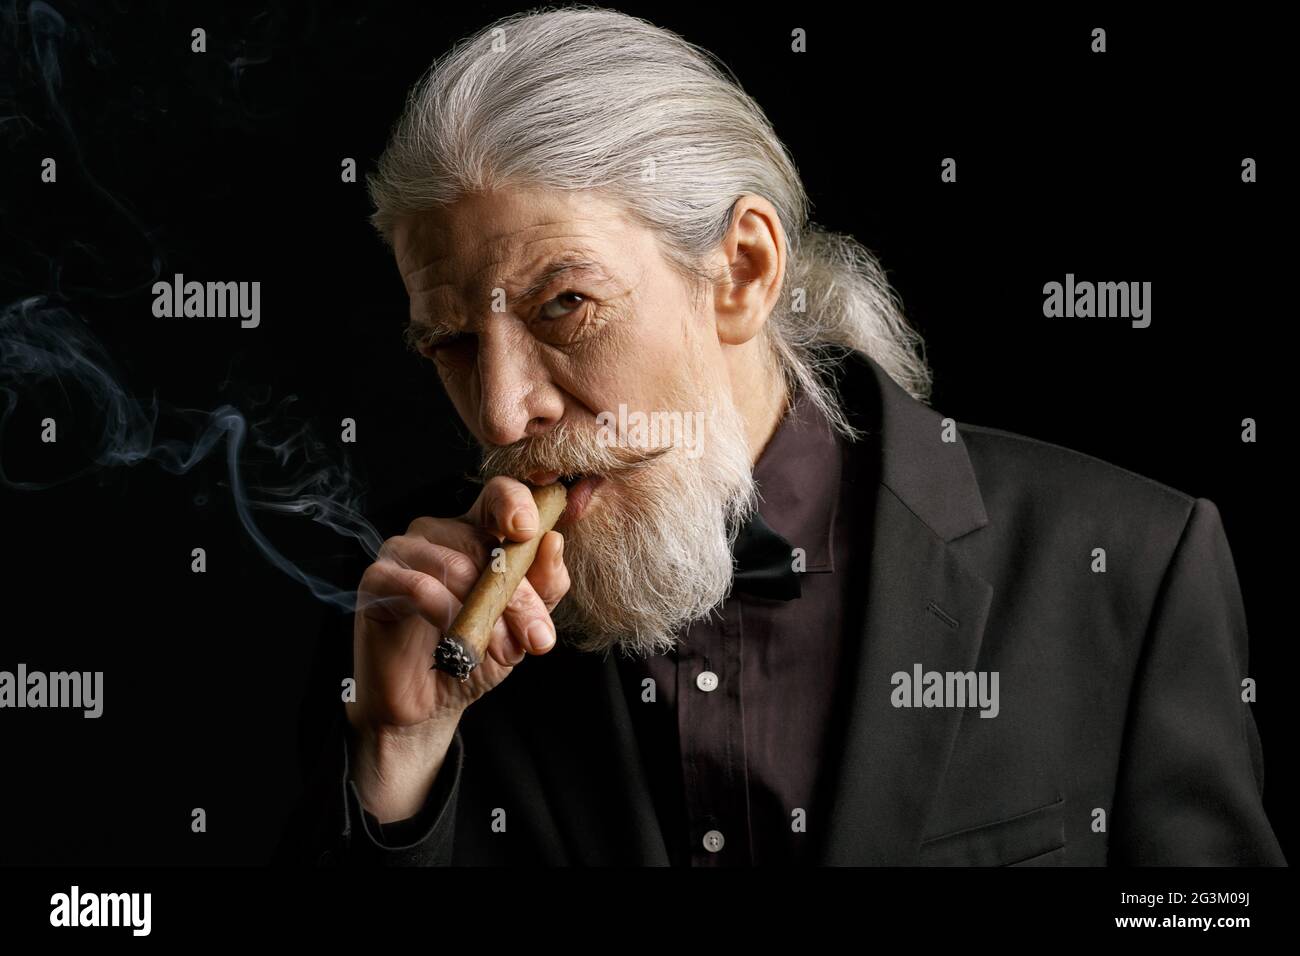 Stylish aged man with long grey hair smoking cigar. Stock Photo